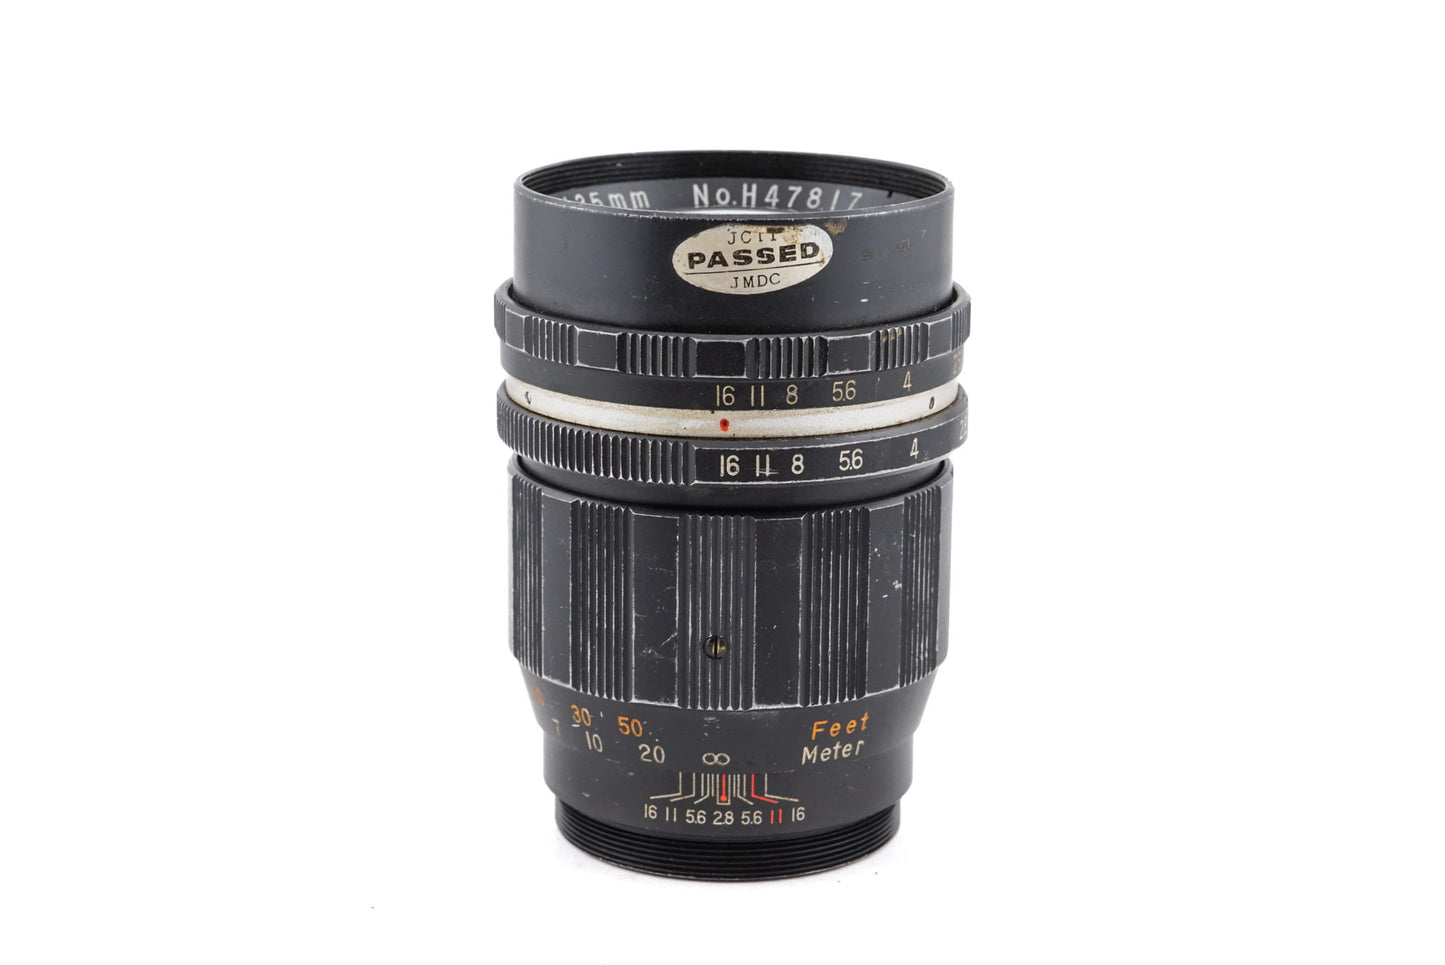 Cunor 135mm f2.8 - Lens